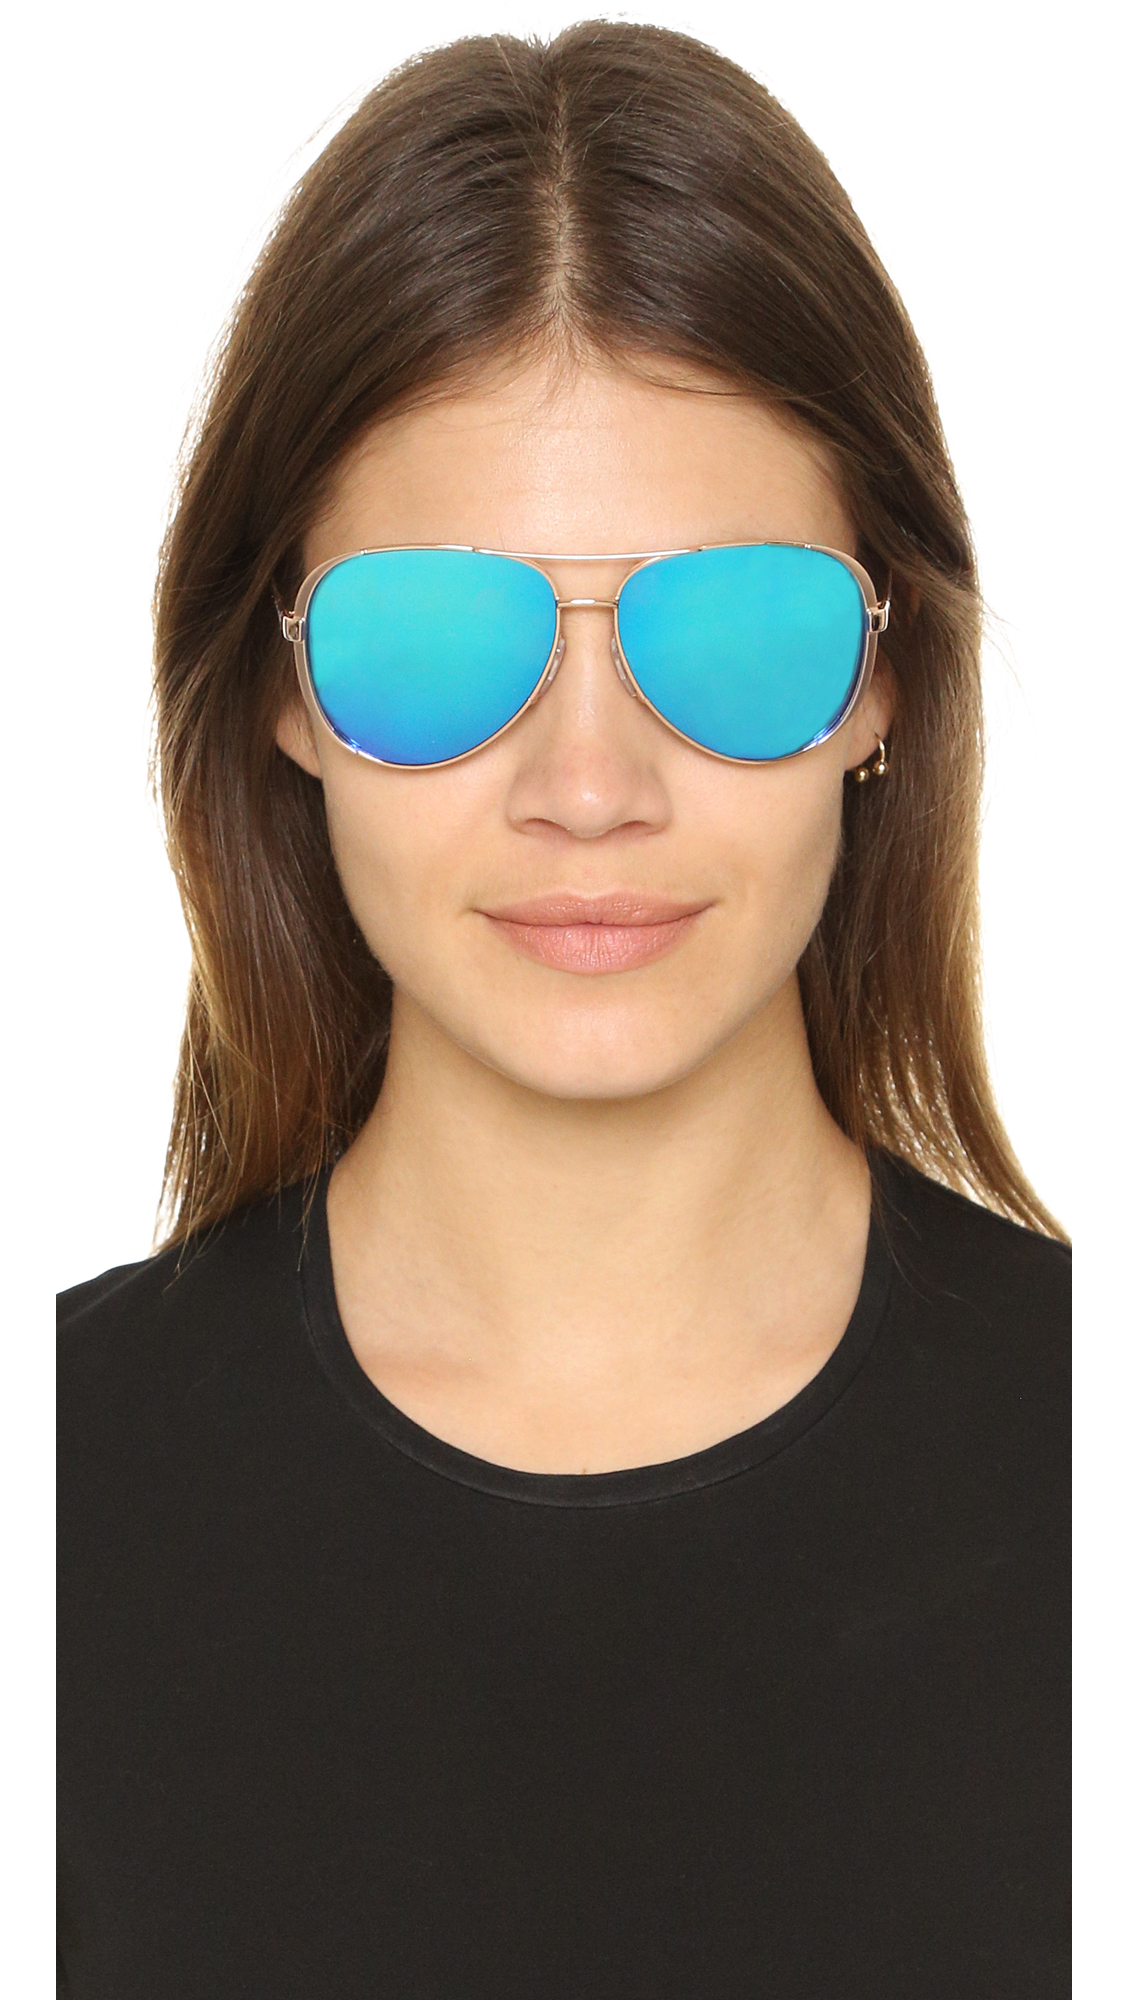 Michael Kors Rubber Chelsea Polarized Sunglasses in Rose Gold/Blue  (Metallic) - Lyst